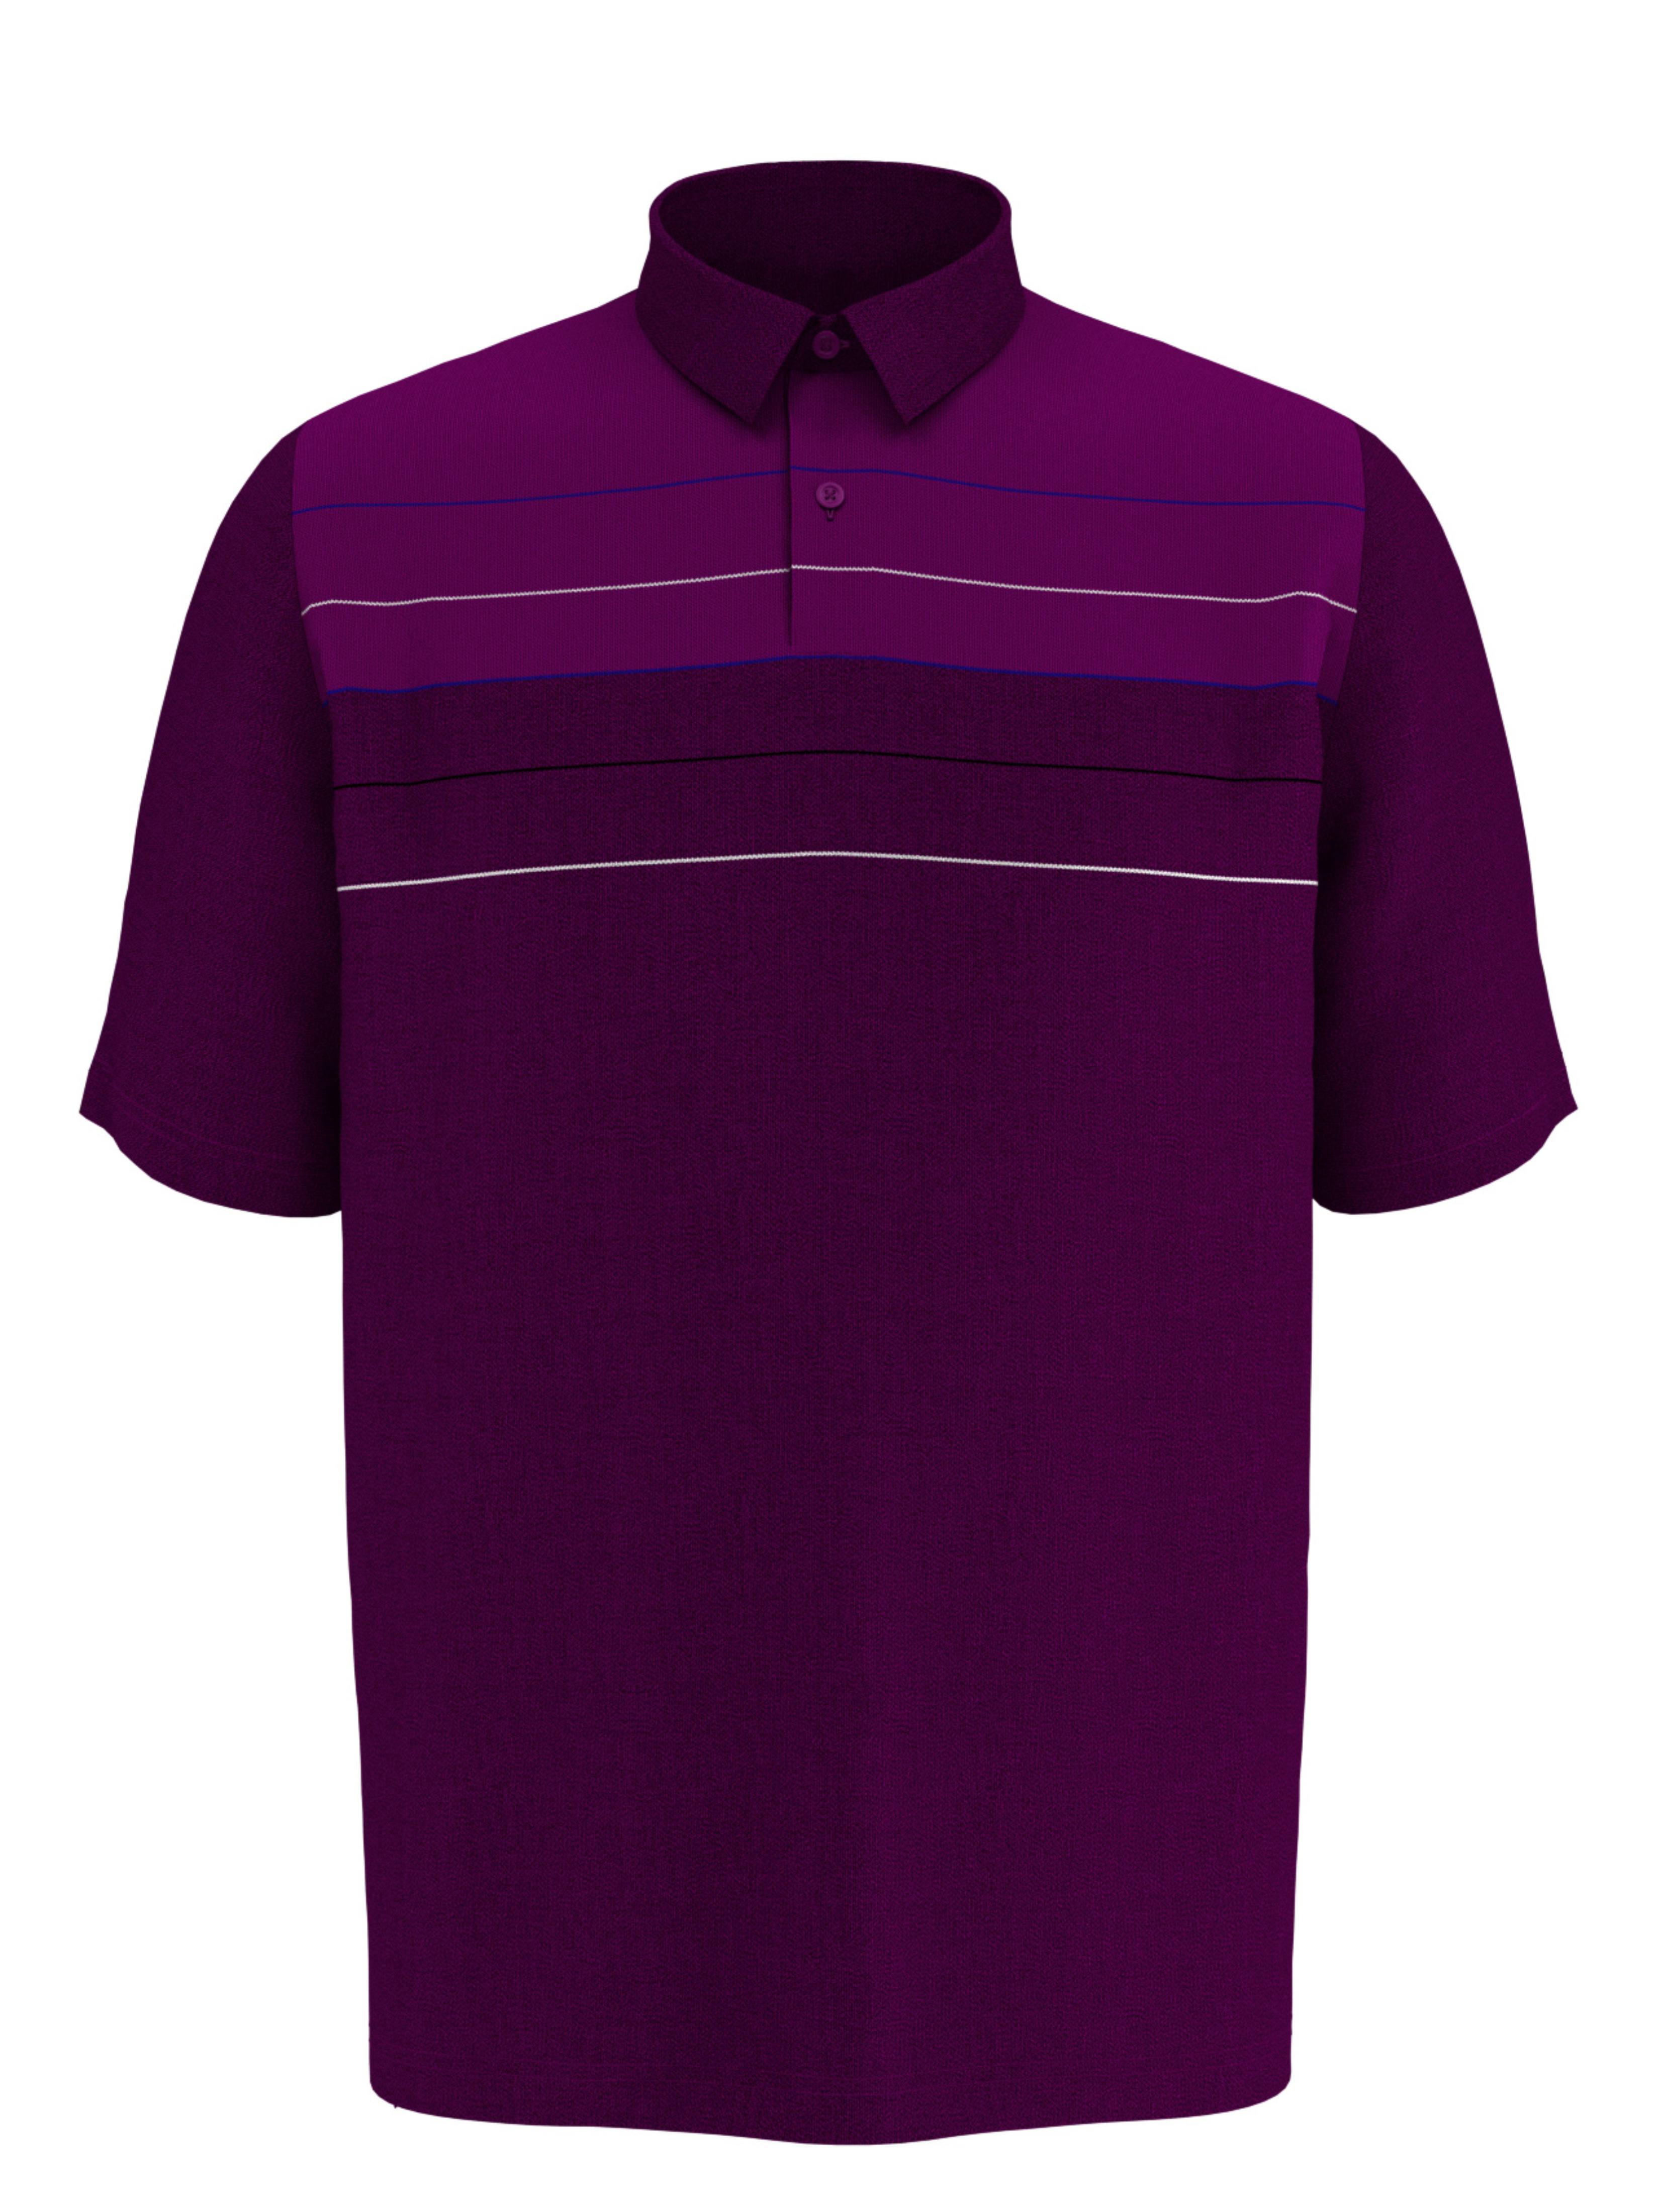 Callaway Apparel Mens Big & Tall Jaspe Color Block Golf Polo Shirt, Size 3XLT, Dark Purple, Polyester/Recycled Polyester/Elastane | Golf Apparel Shop